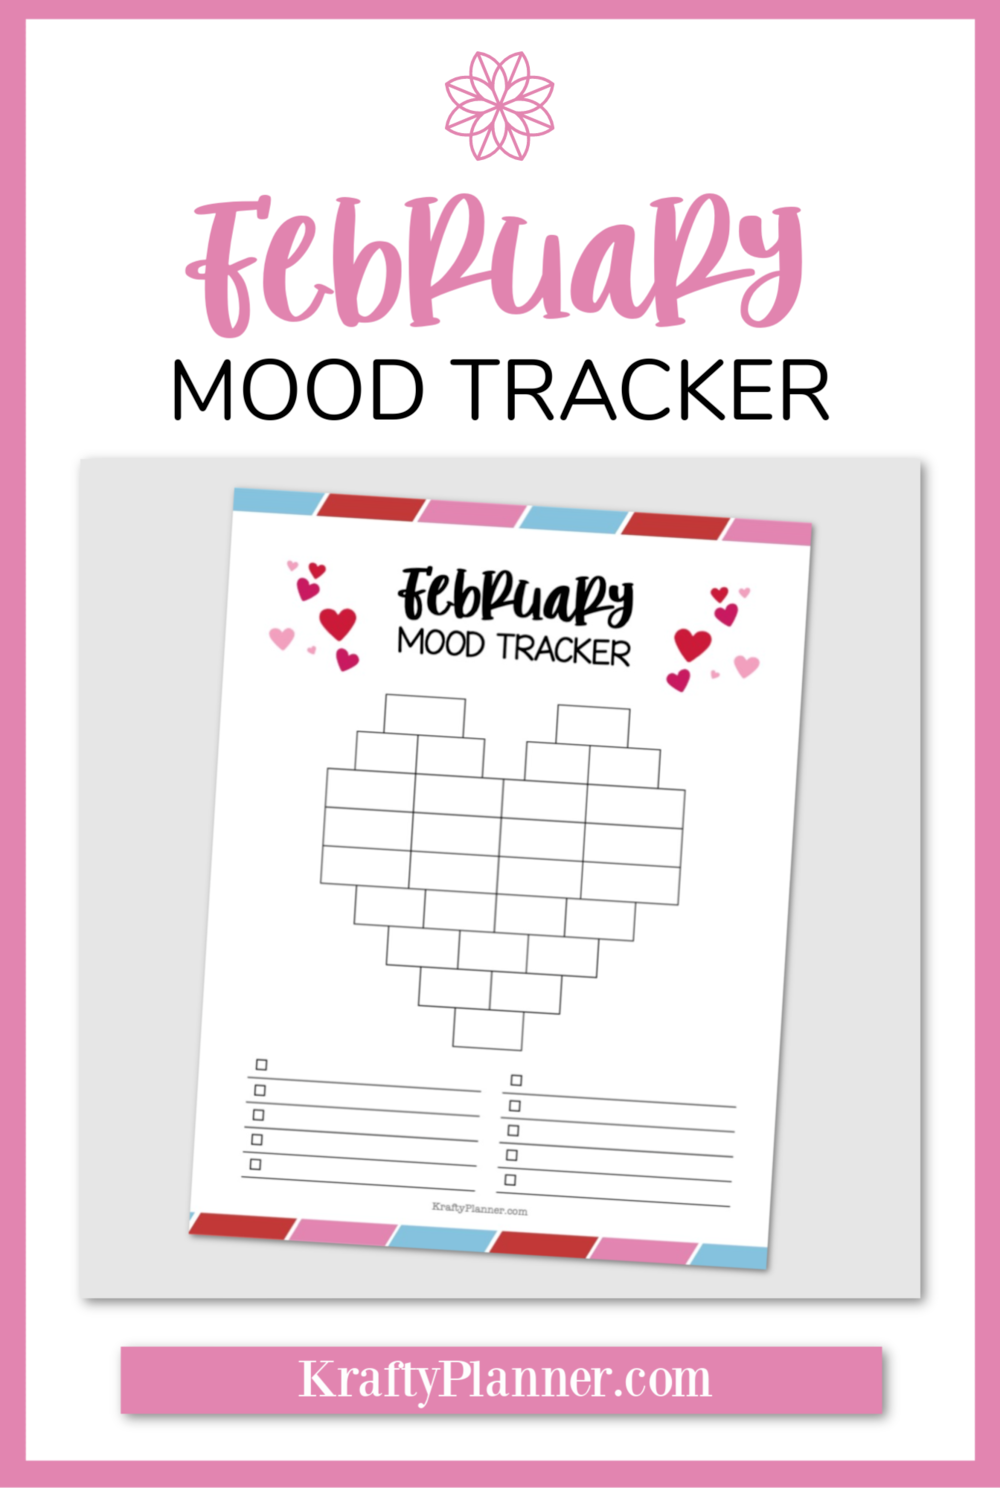 February Mood Tracker Heart Free Printable Krafty Planner Mood Tracker Planner Society Habit Tracker Printable